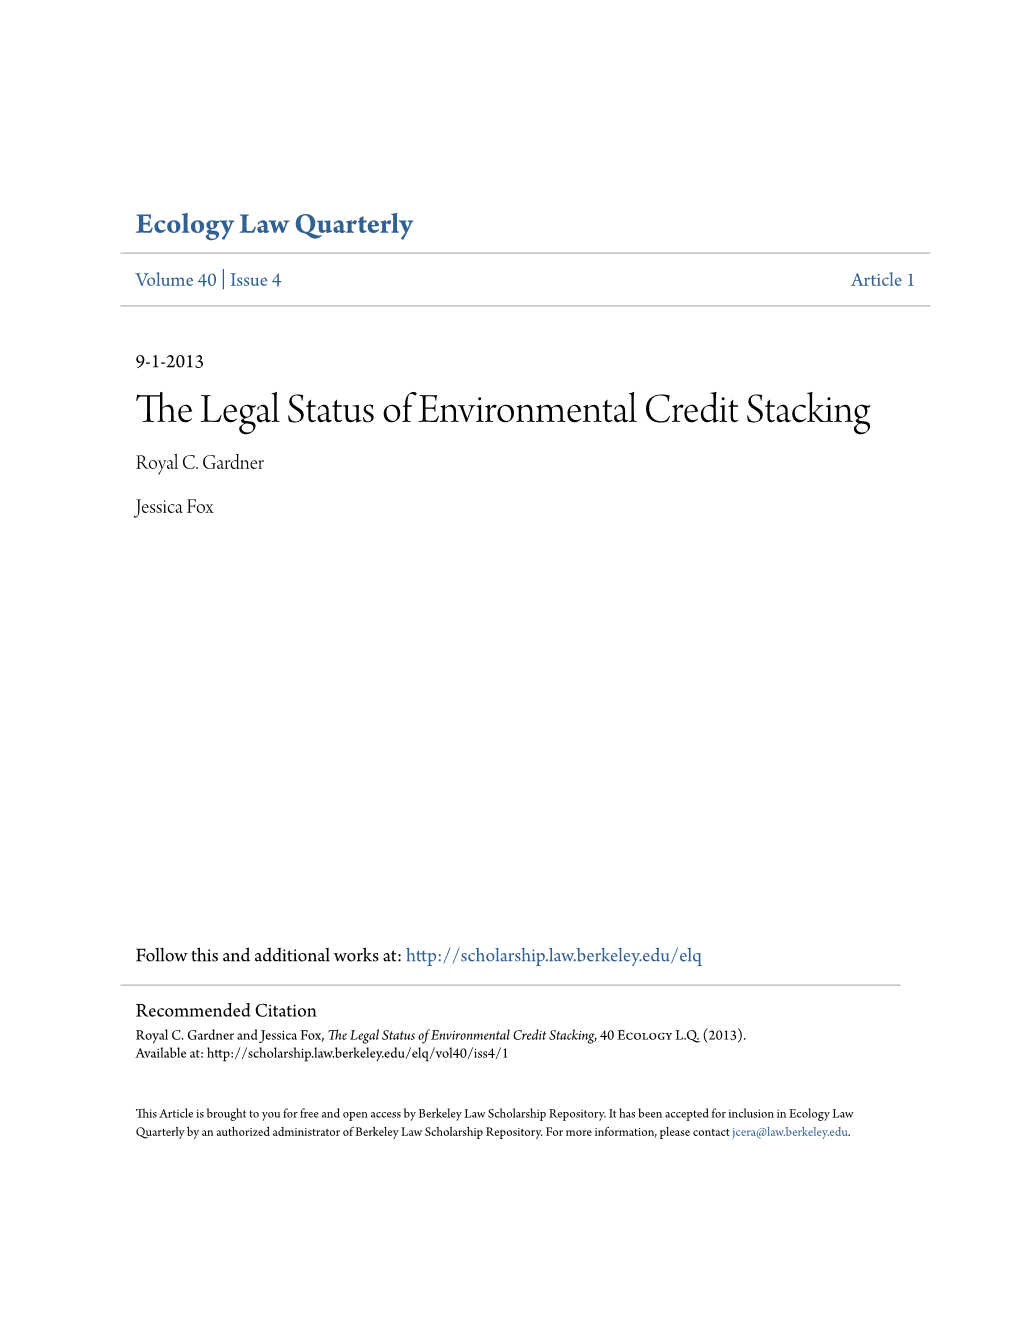 The Legal Status of Environmental Credit Stacking Royal C